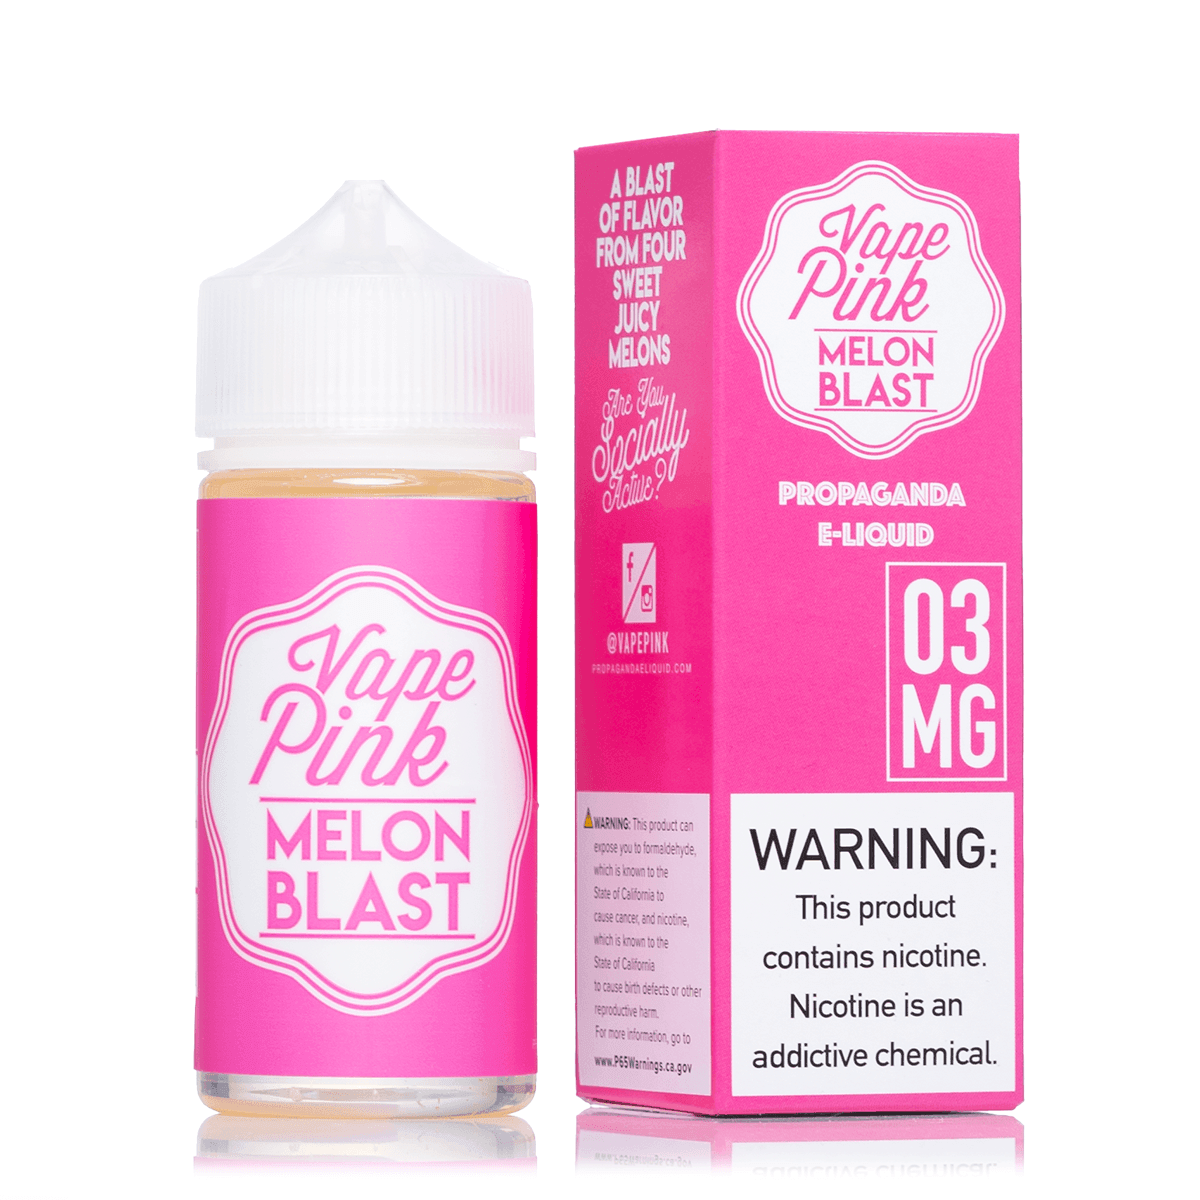 Vape Pink Melon Blast 100ml